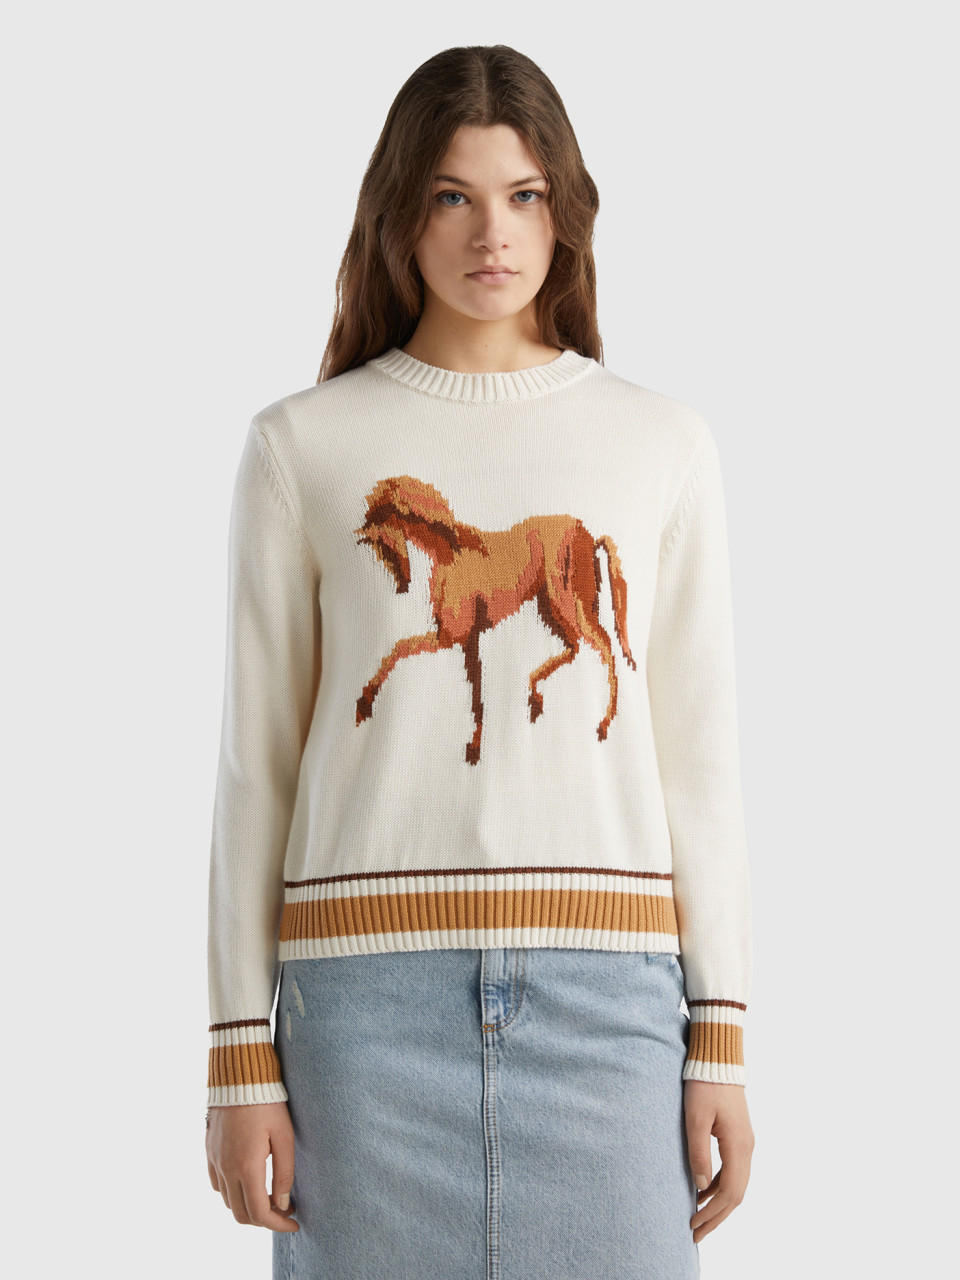 Benetton, Sweater With Horse Inlay, Creamy White, Women